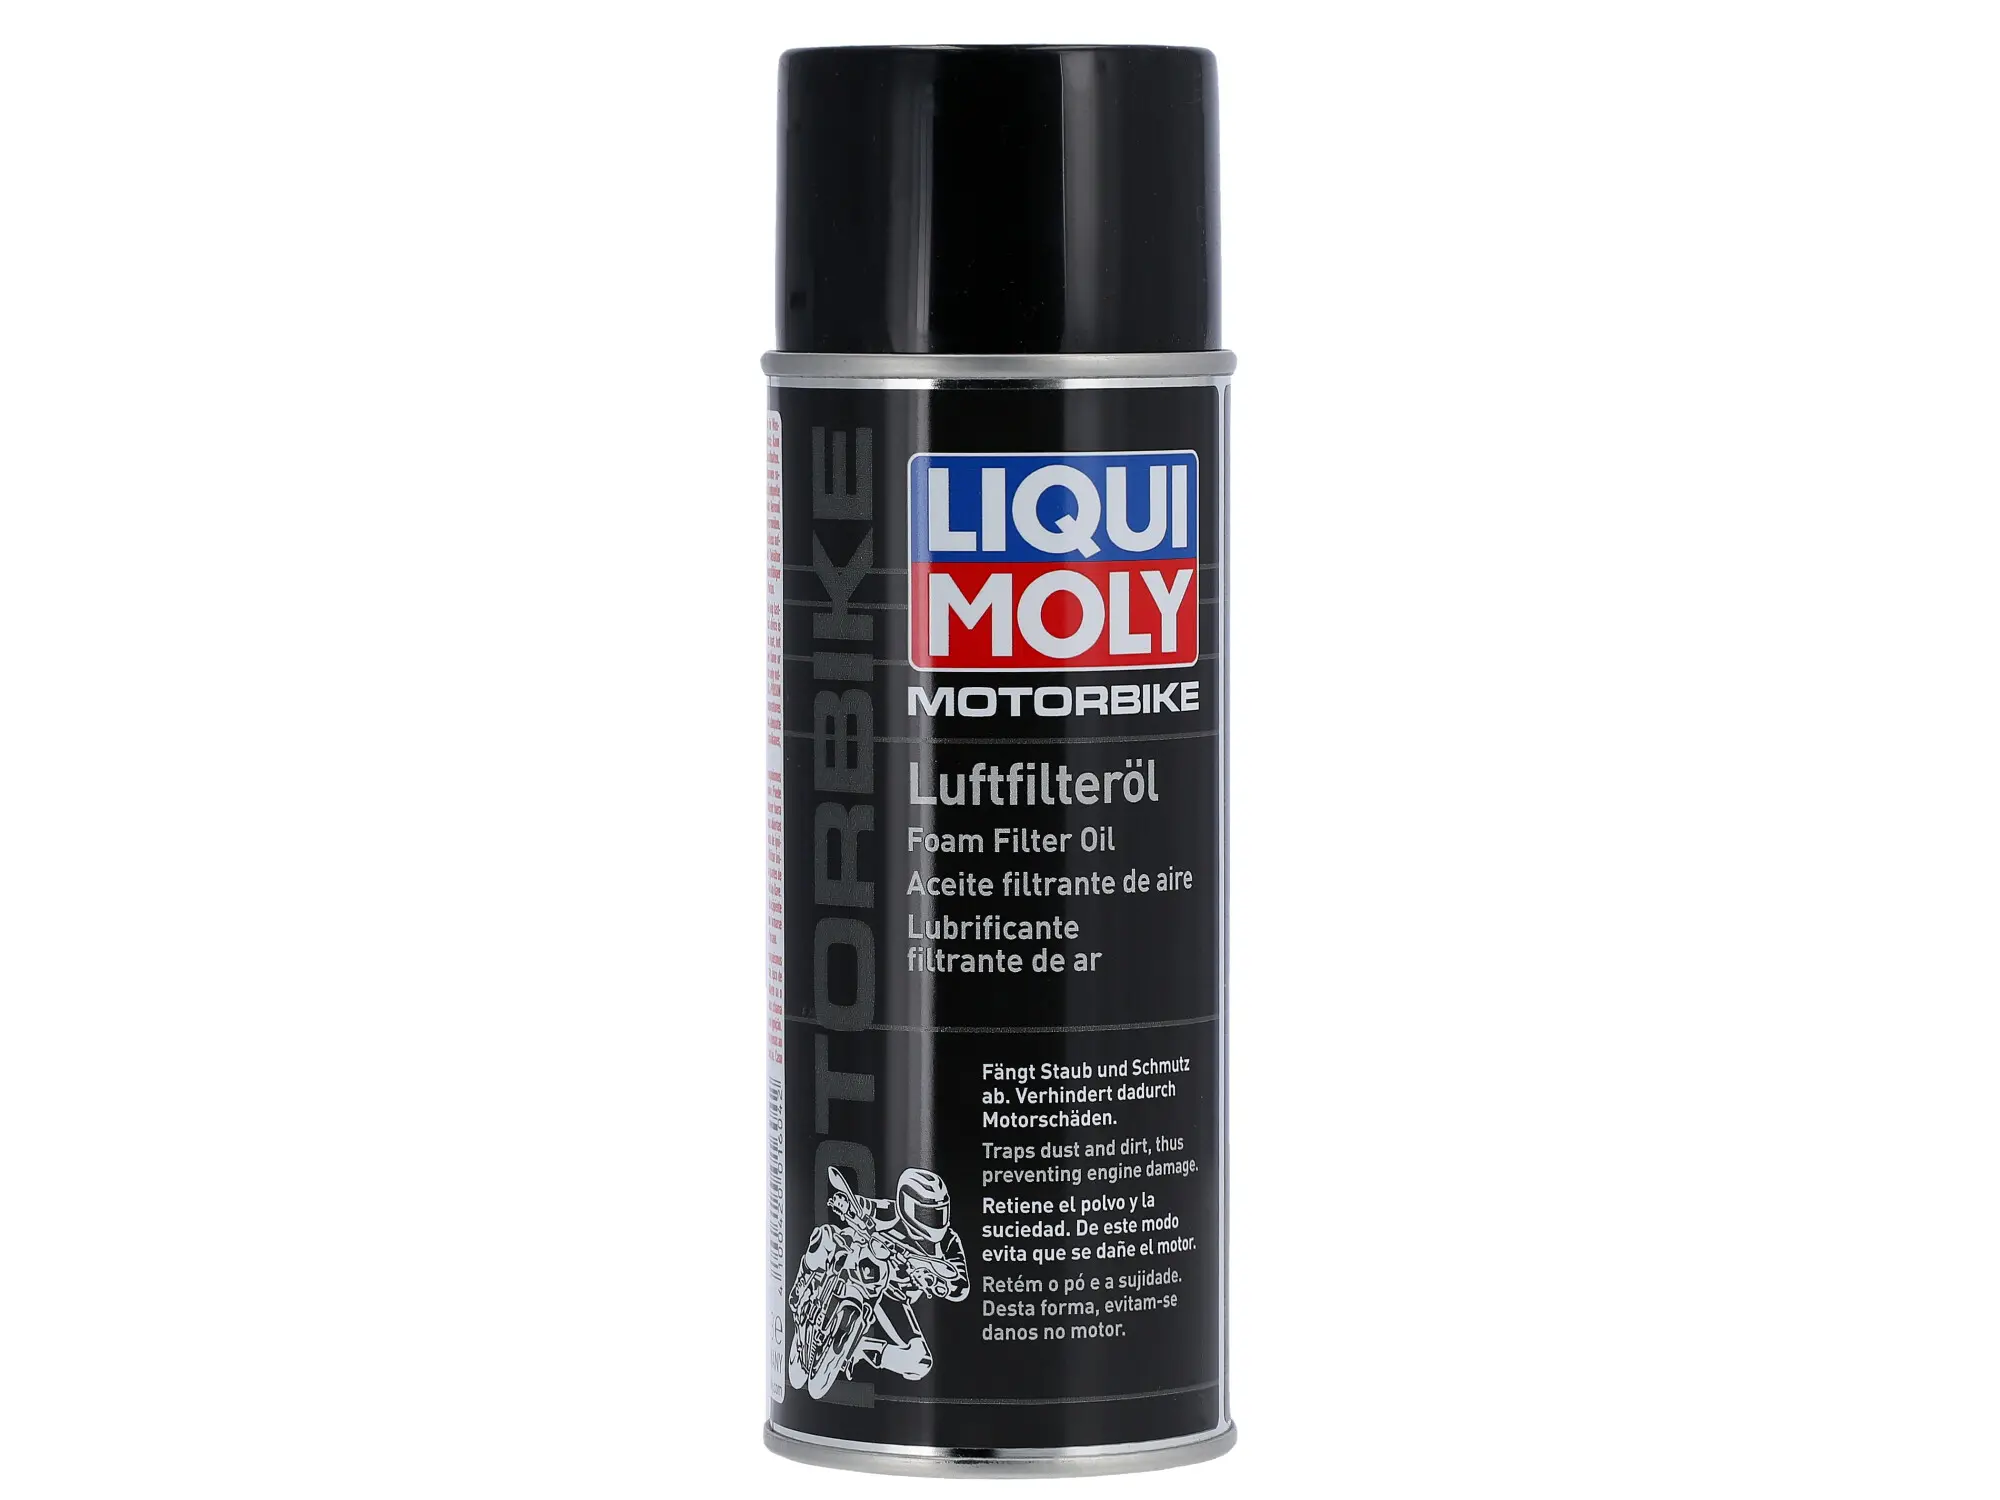 Luftfilteröl (Spray) - 400ml LIQUI-MOLY*, Item no: 10078522 - Image 1